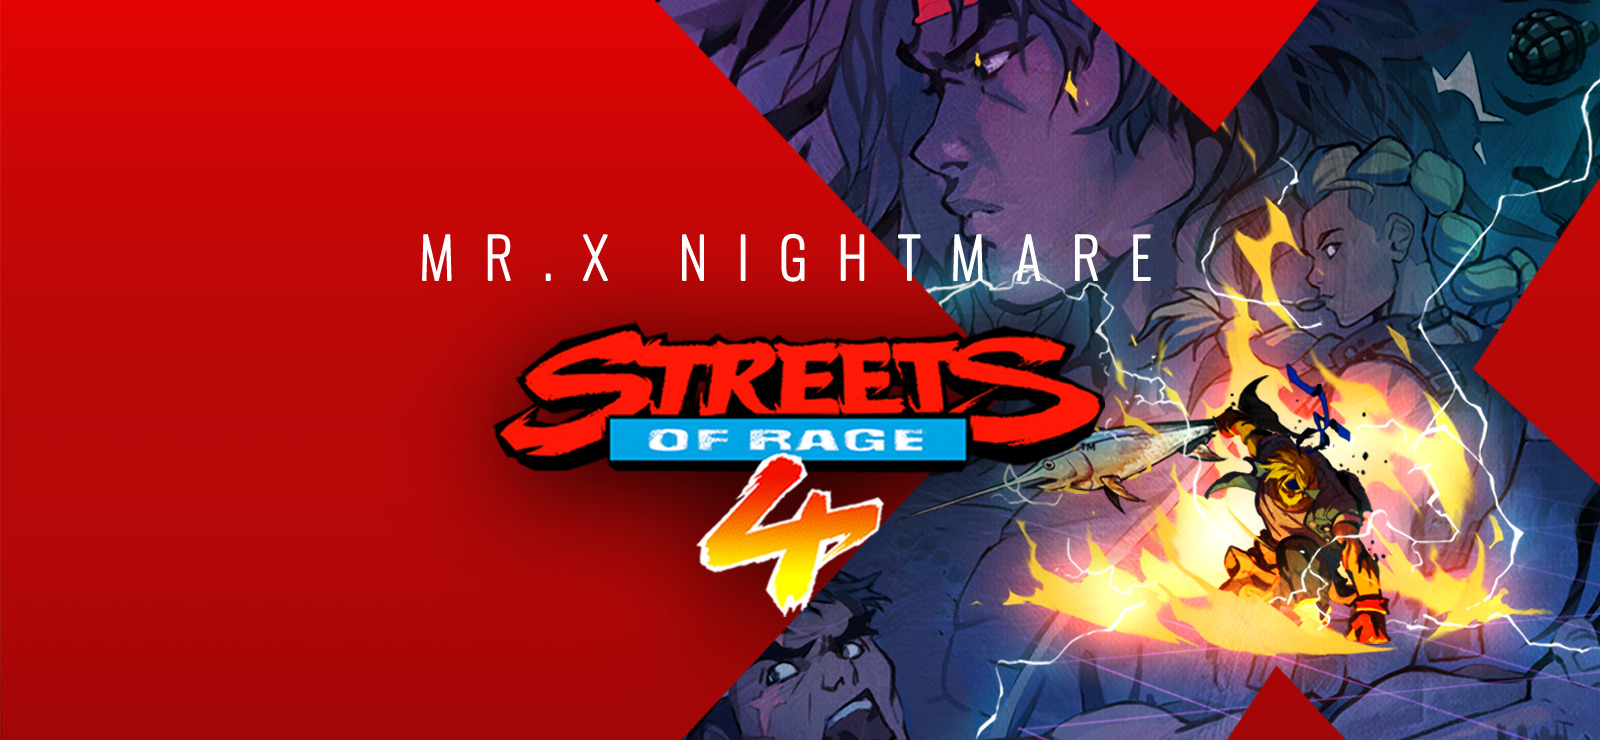 streets of rage 4 mr. x nightmare release date